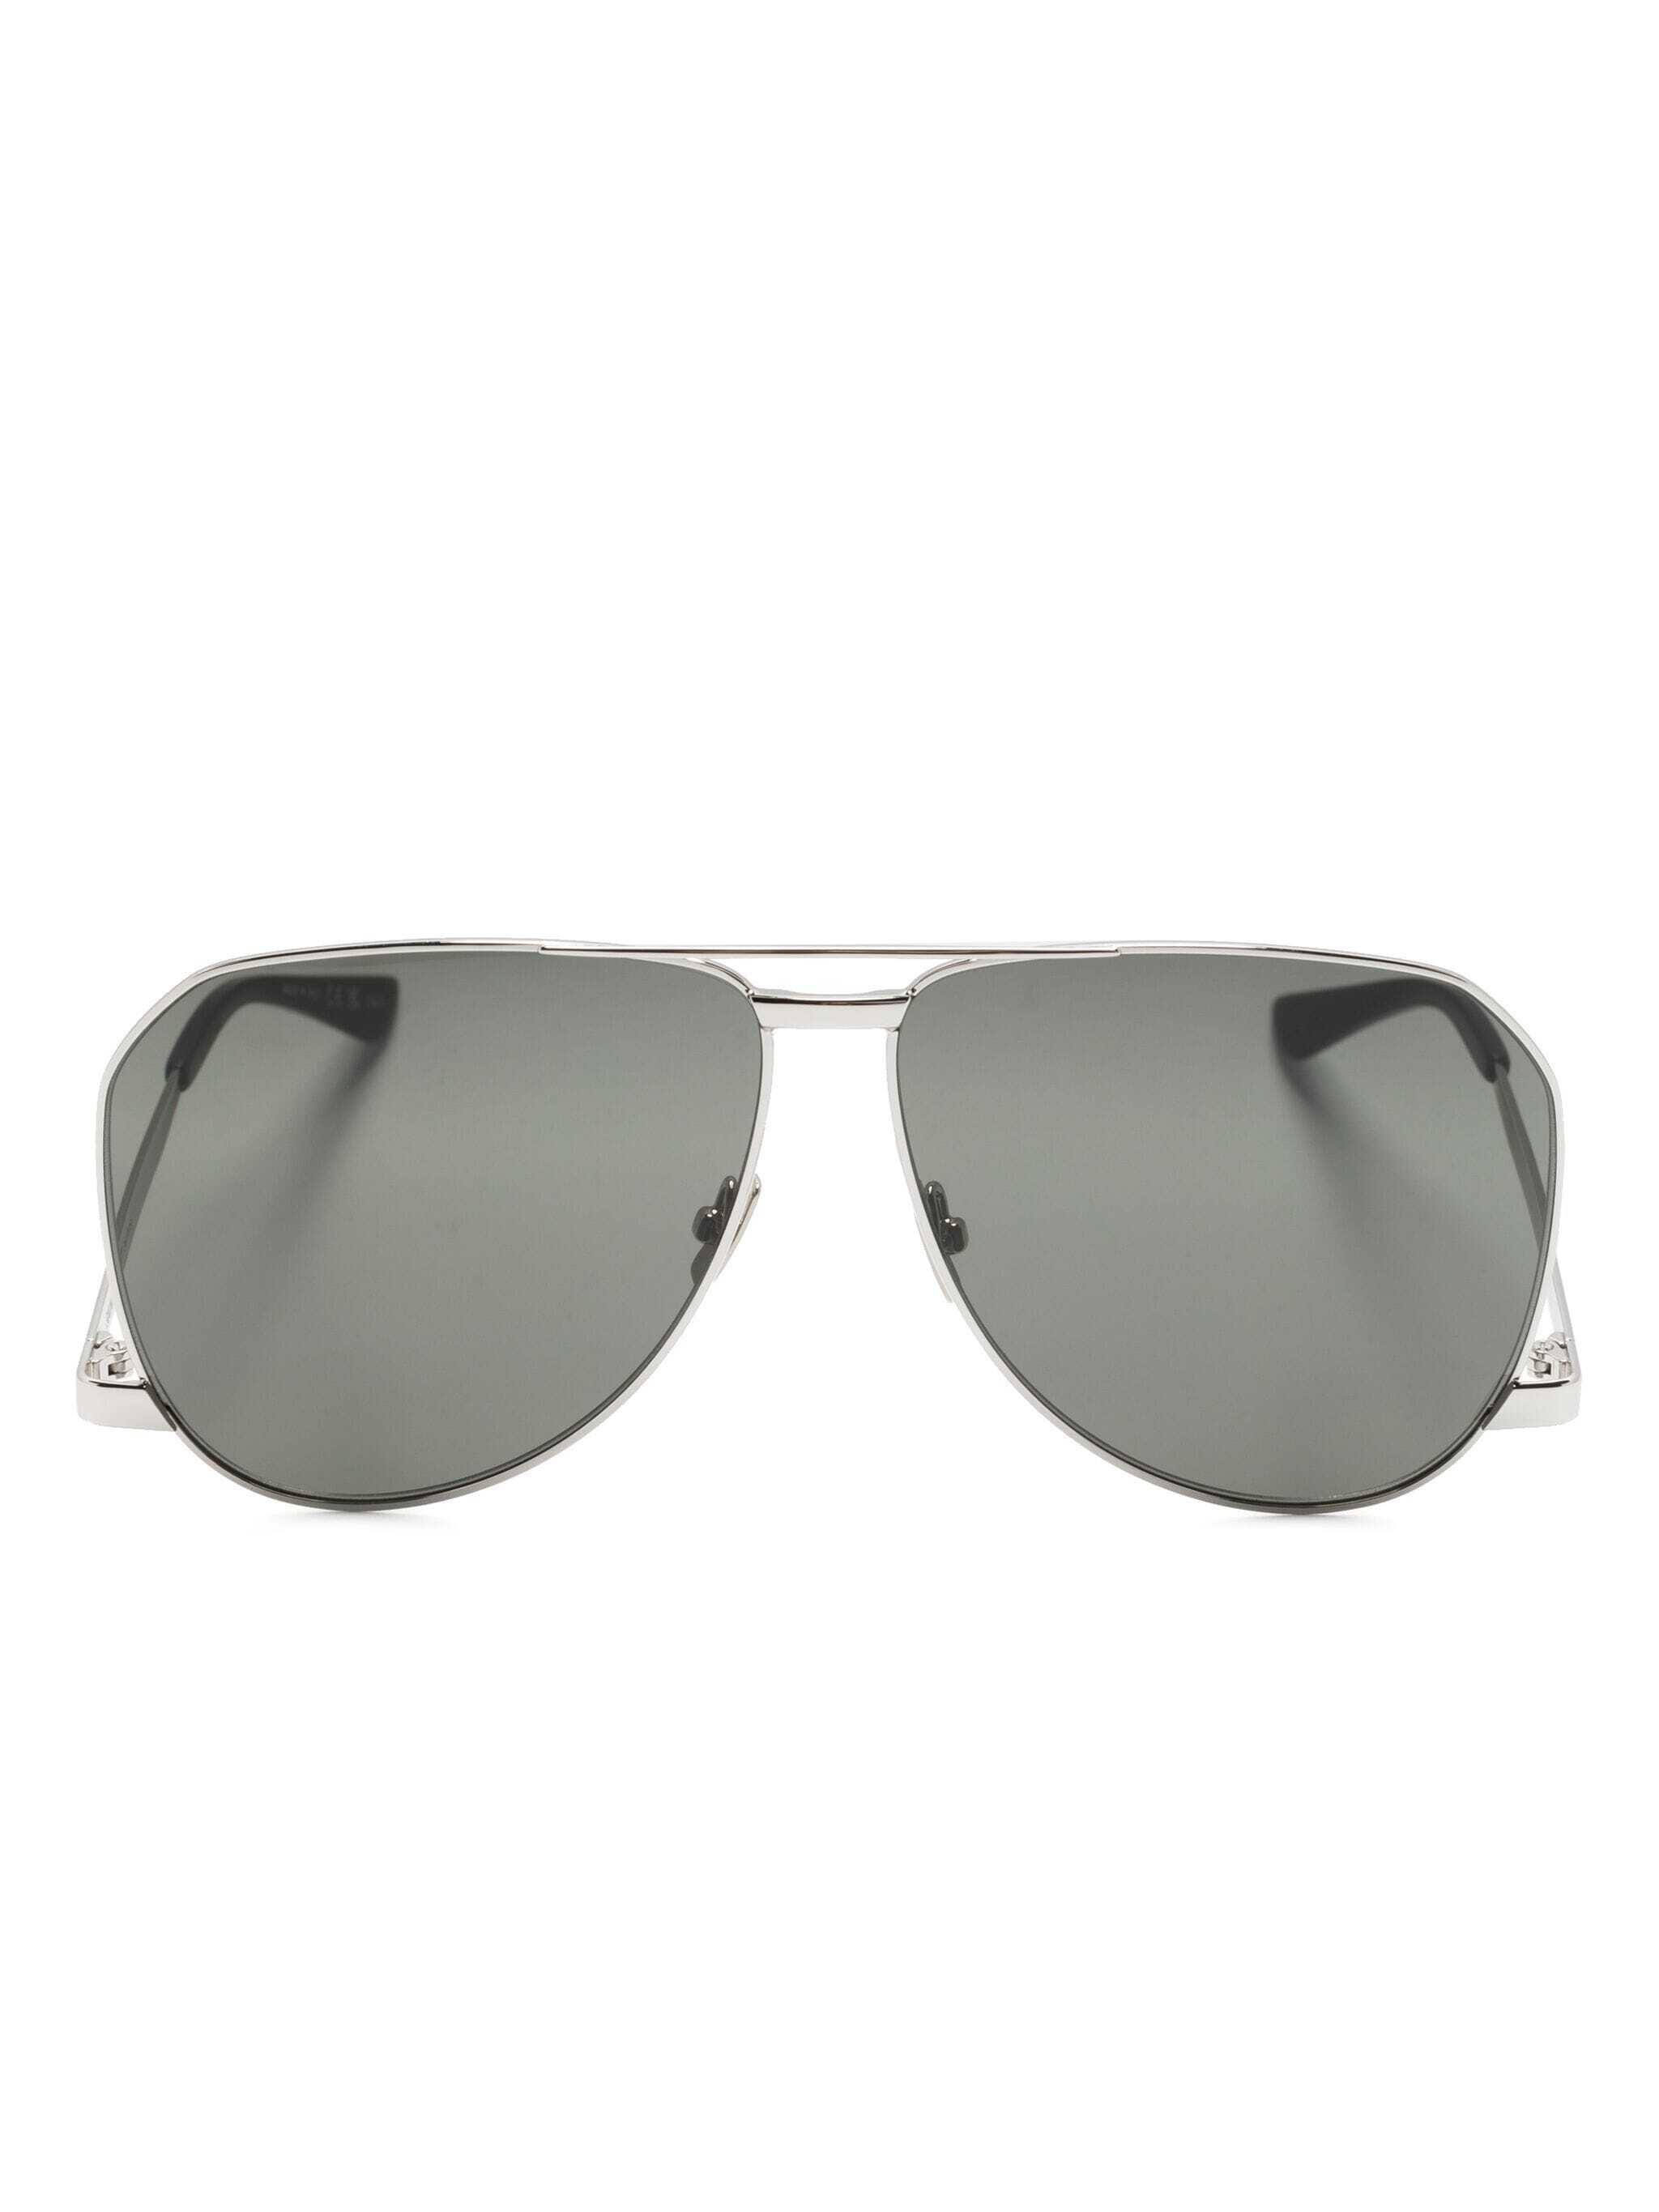 SL 690 dust sunglasses